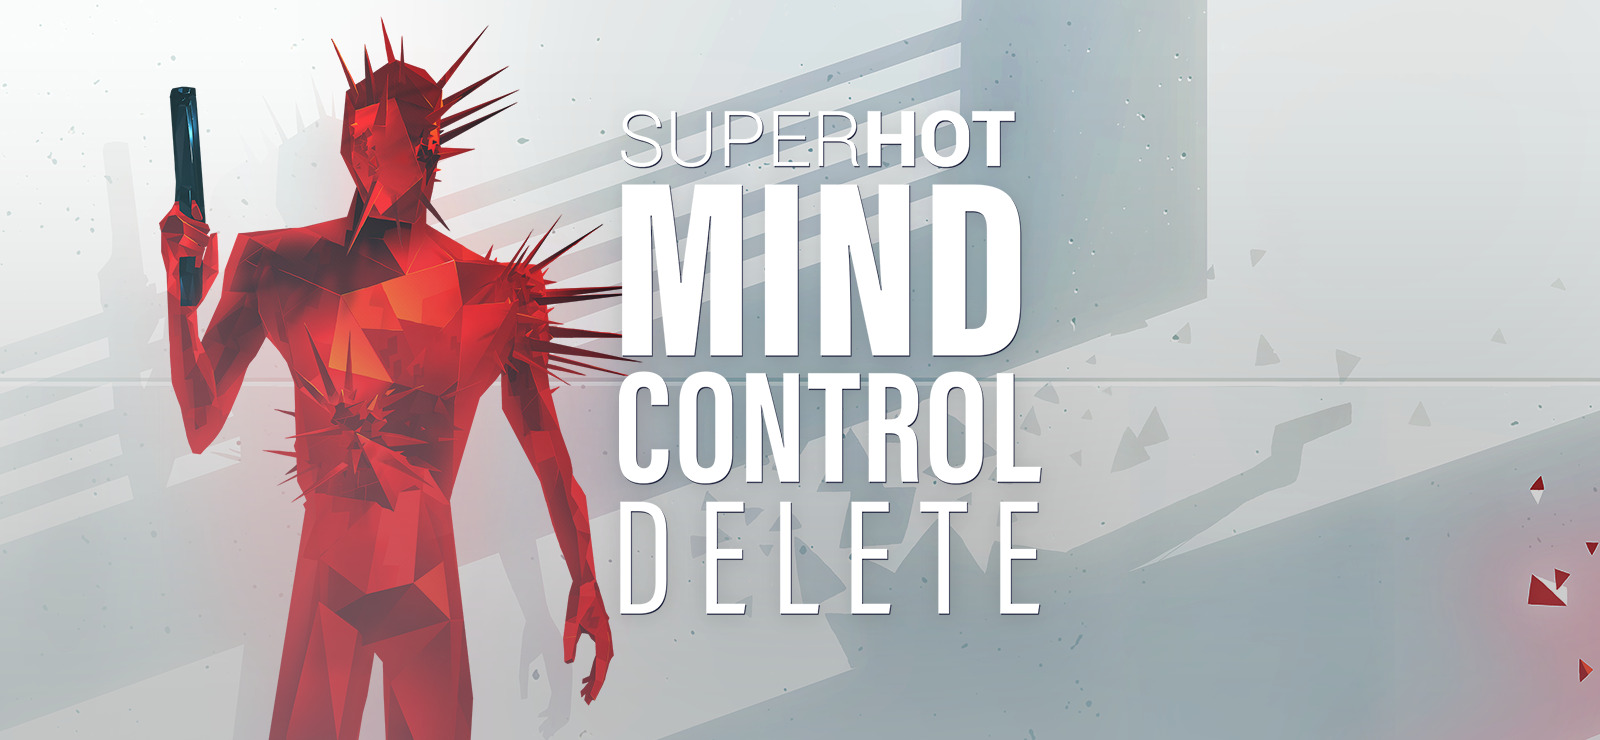 download Superhot Mind Control Delete free